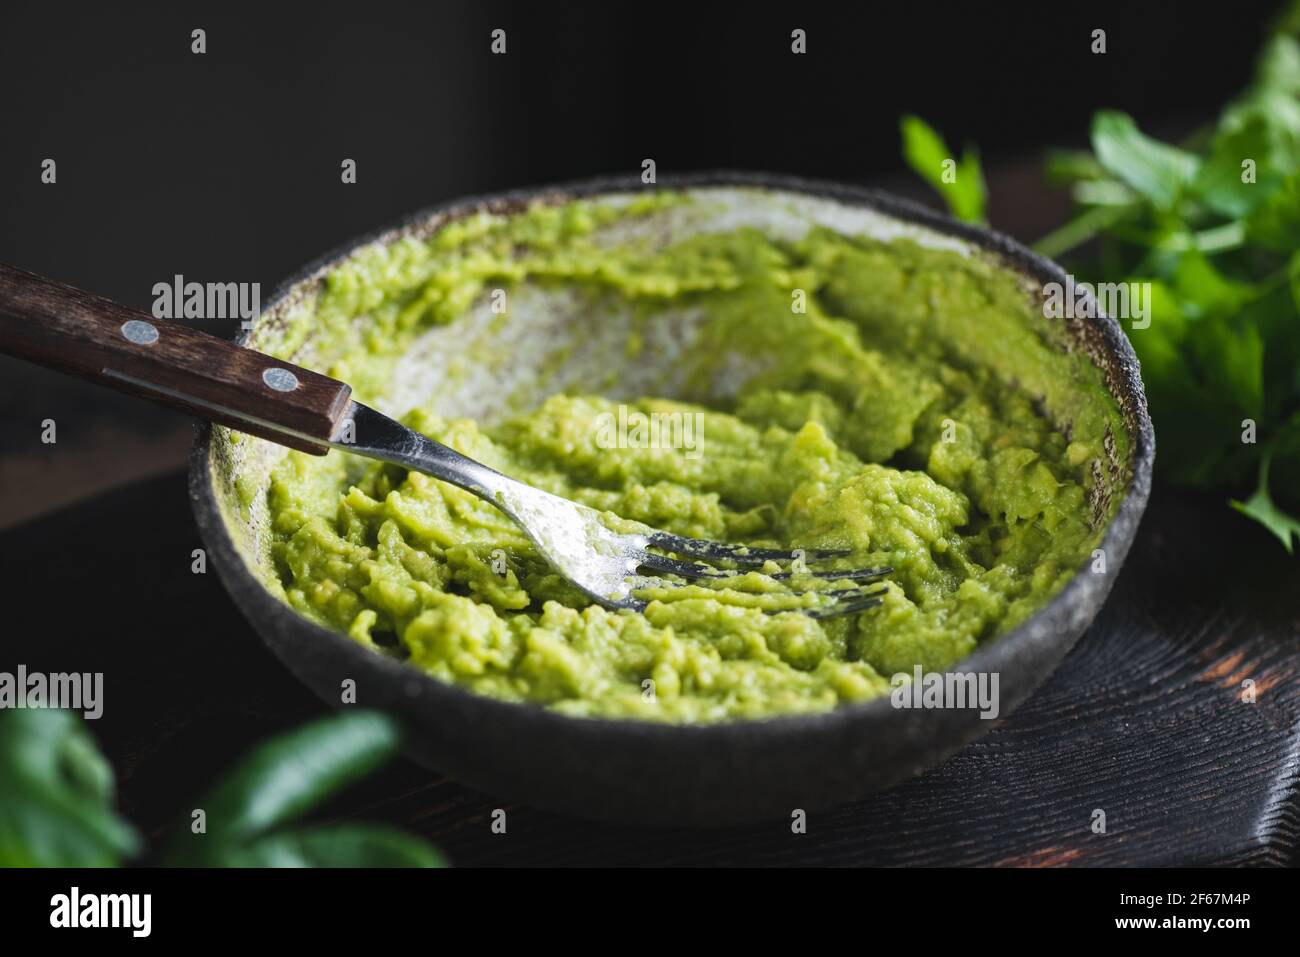 Mashed avocado sauce in a bowl on dark background. Healthy vegan avocado sauce Stock Photo